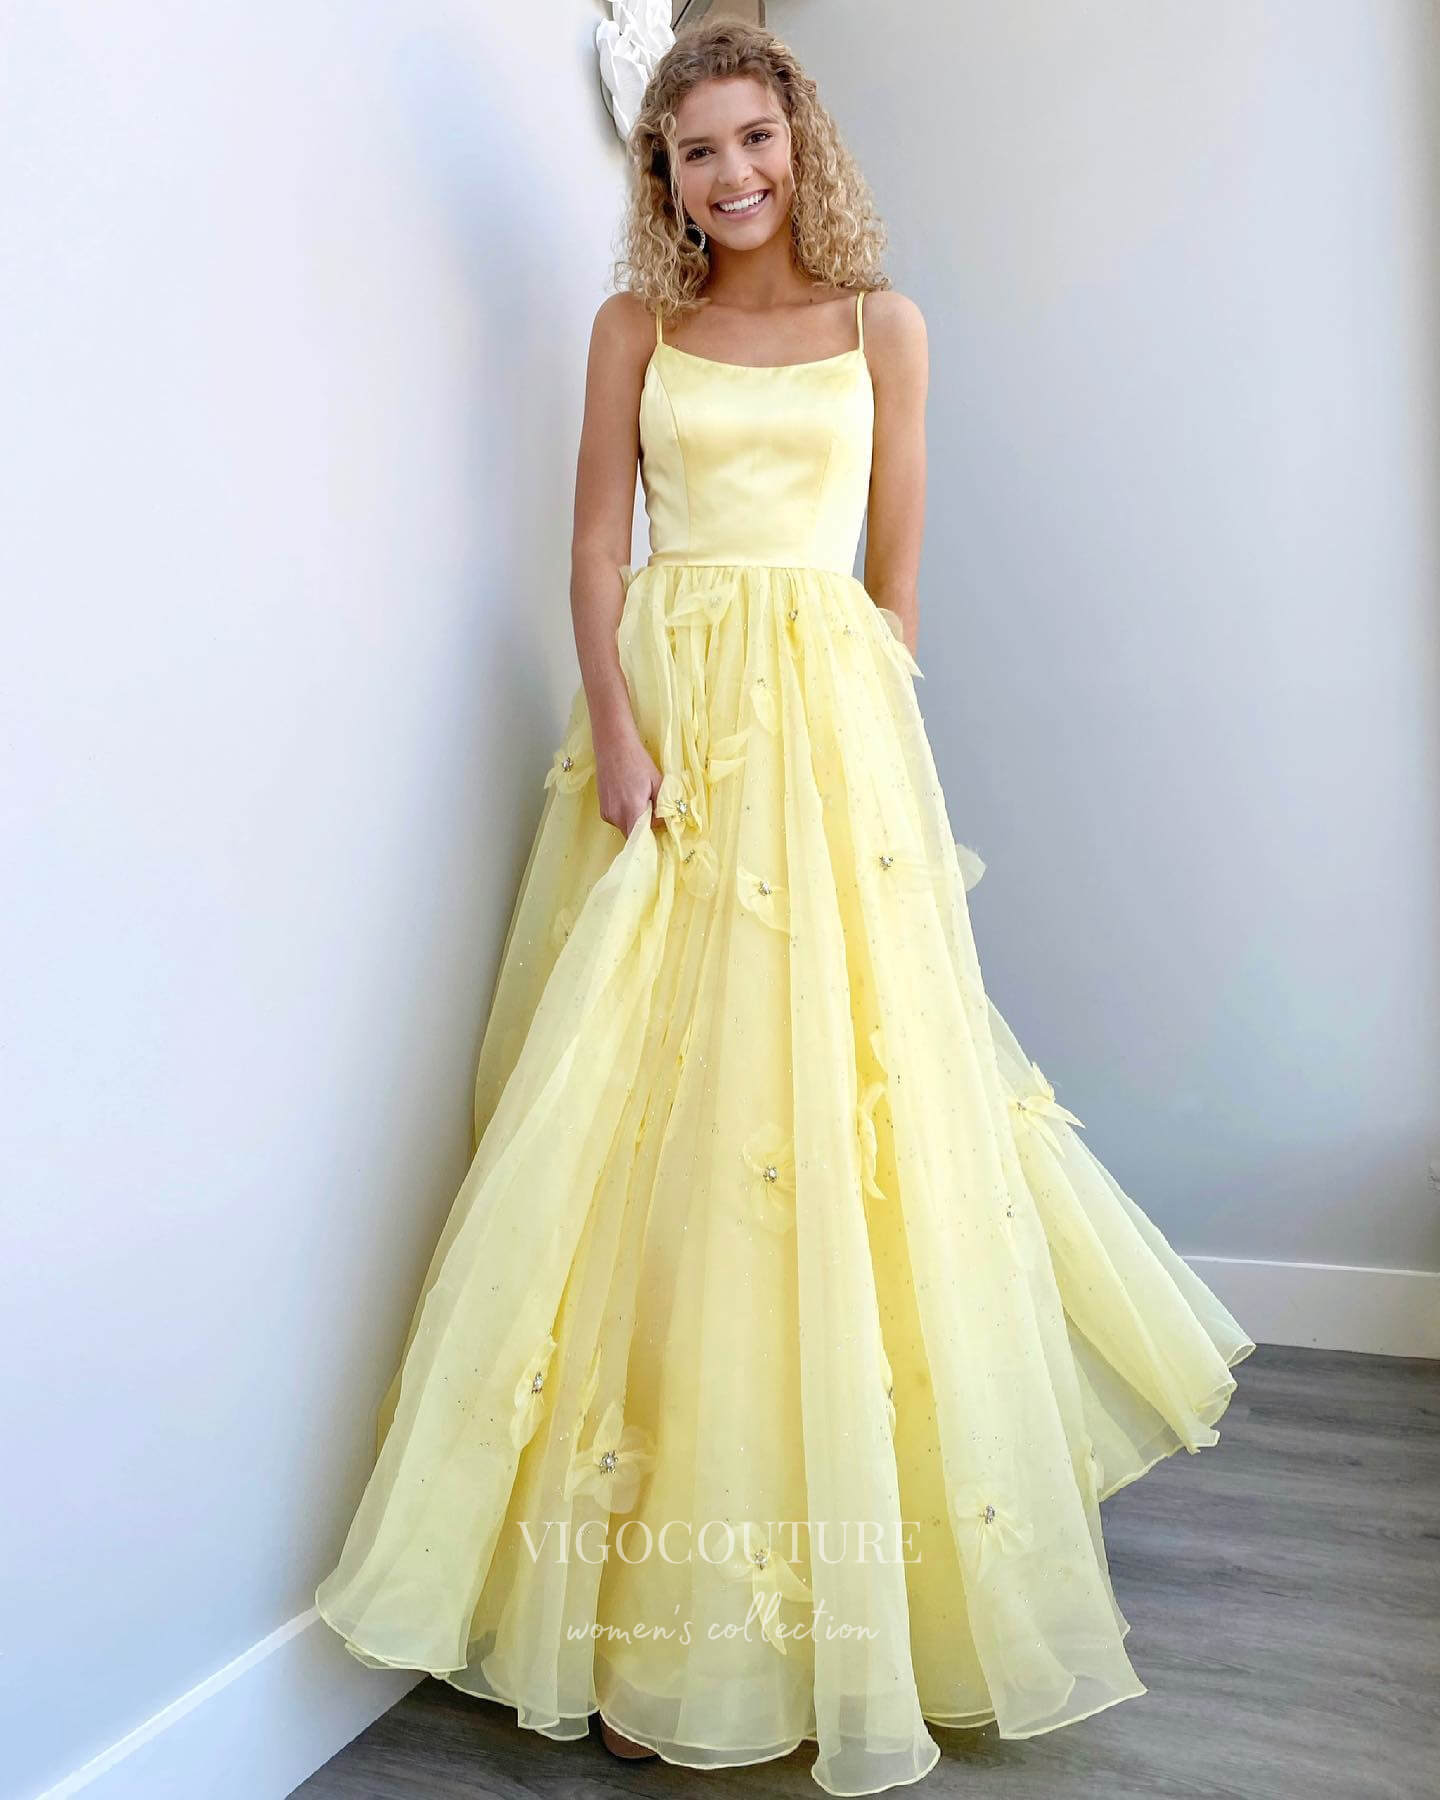 vigocouture-Yellow 3D Flower Prom Dresses Spaghetti Strap Evening Dress 21678b-Prom Dresses-vigocouture-Yellow-US0-